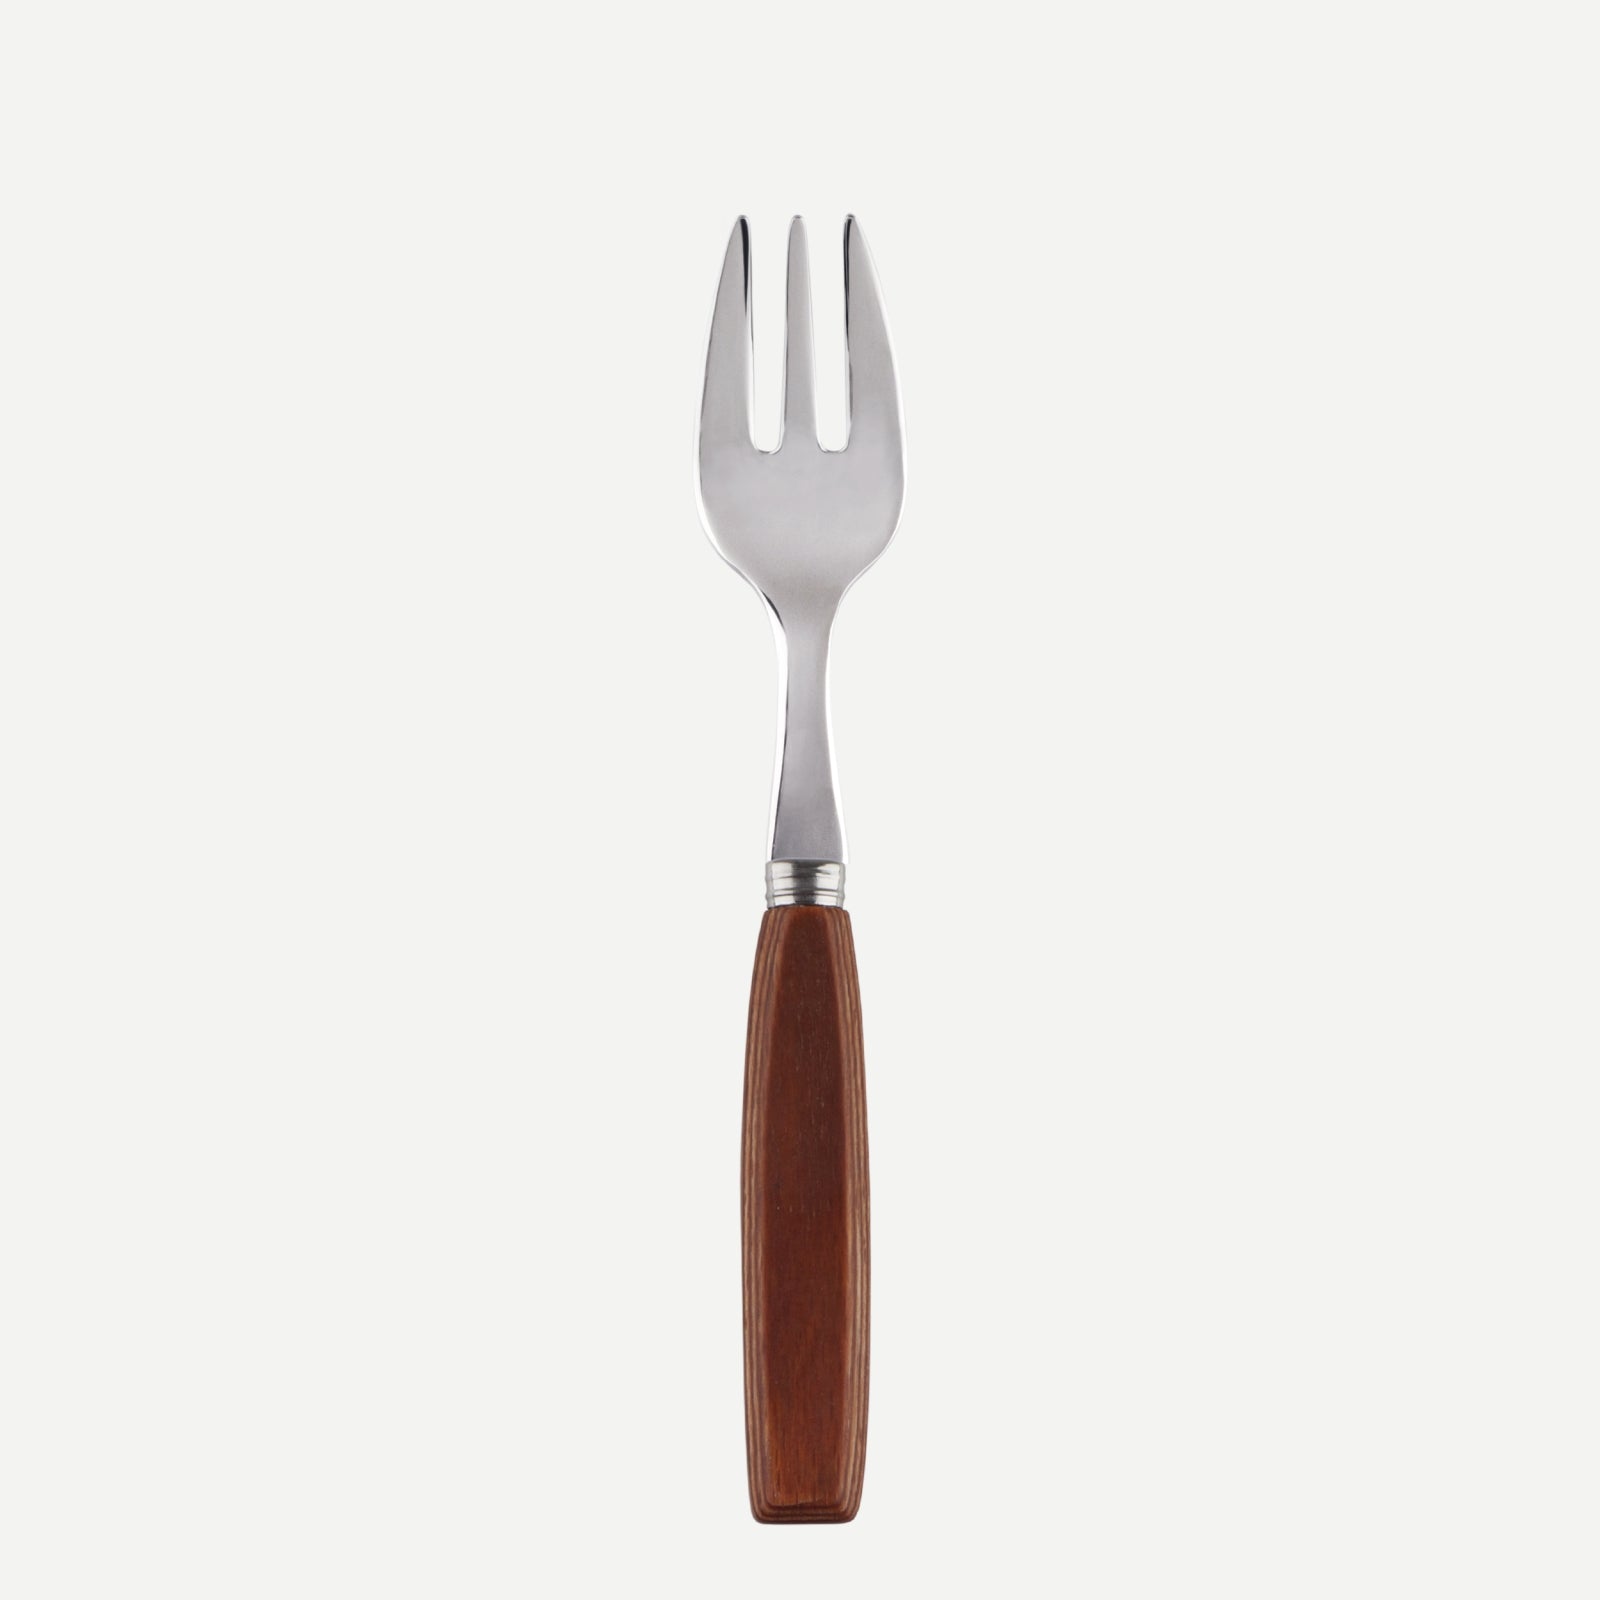 Oyster fork - Djembe - Light press wood